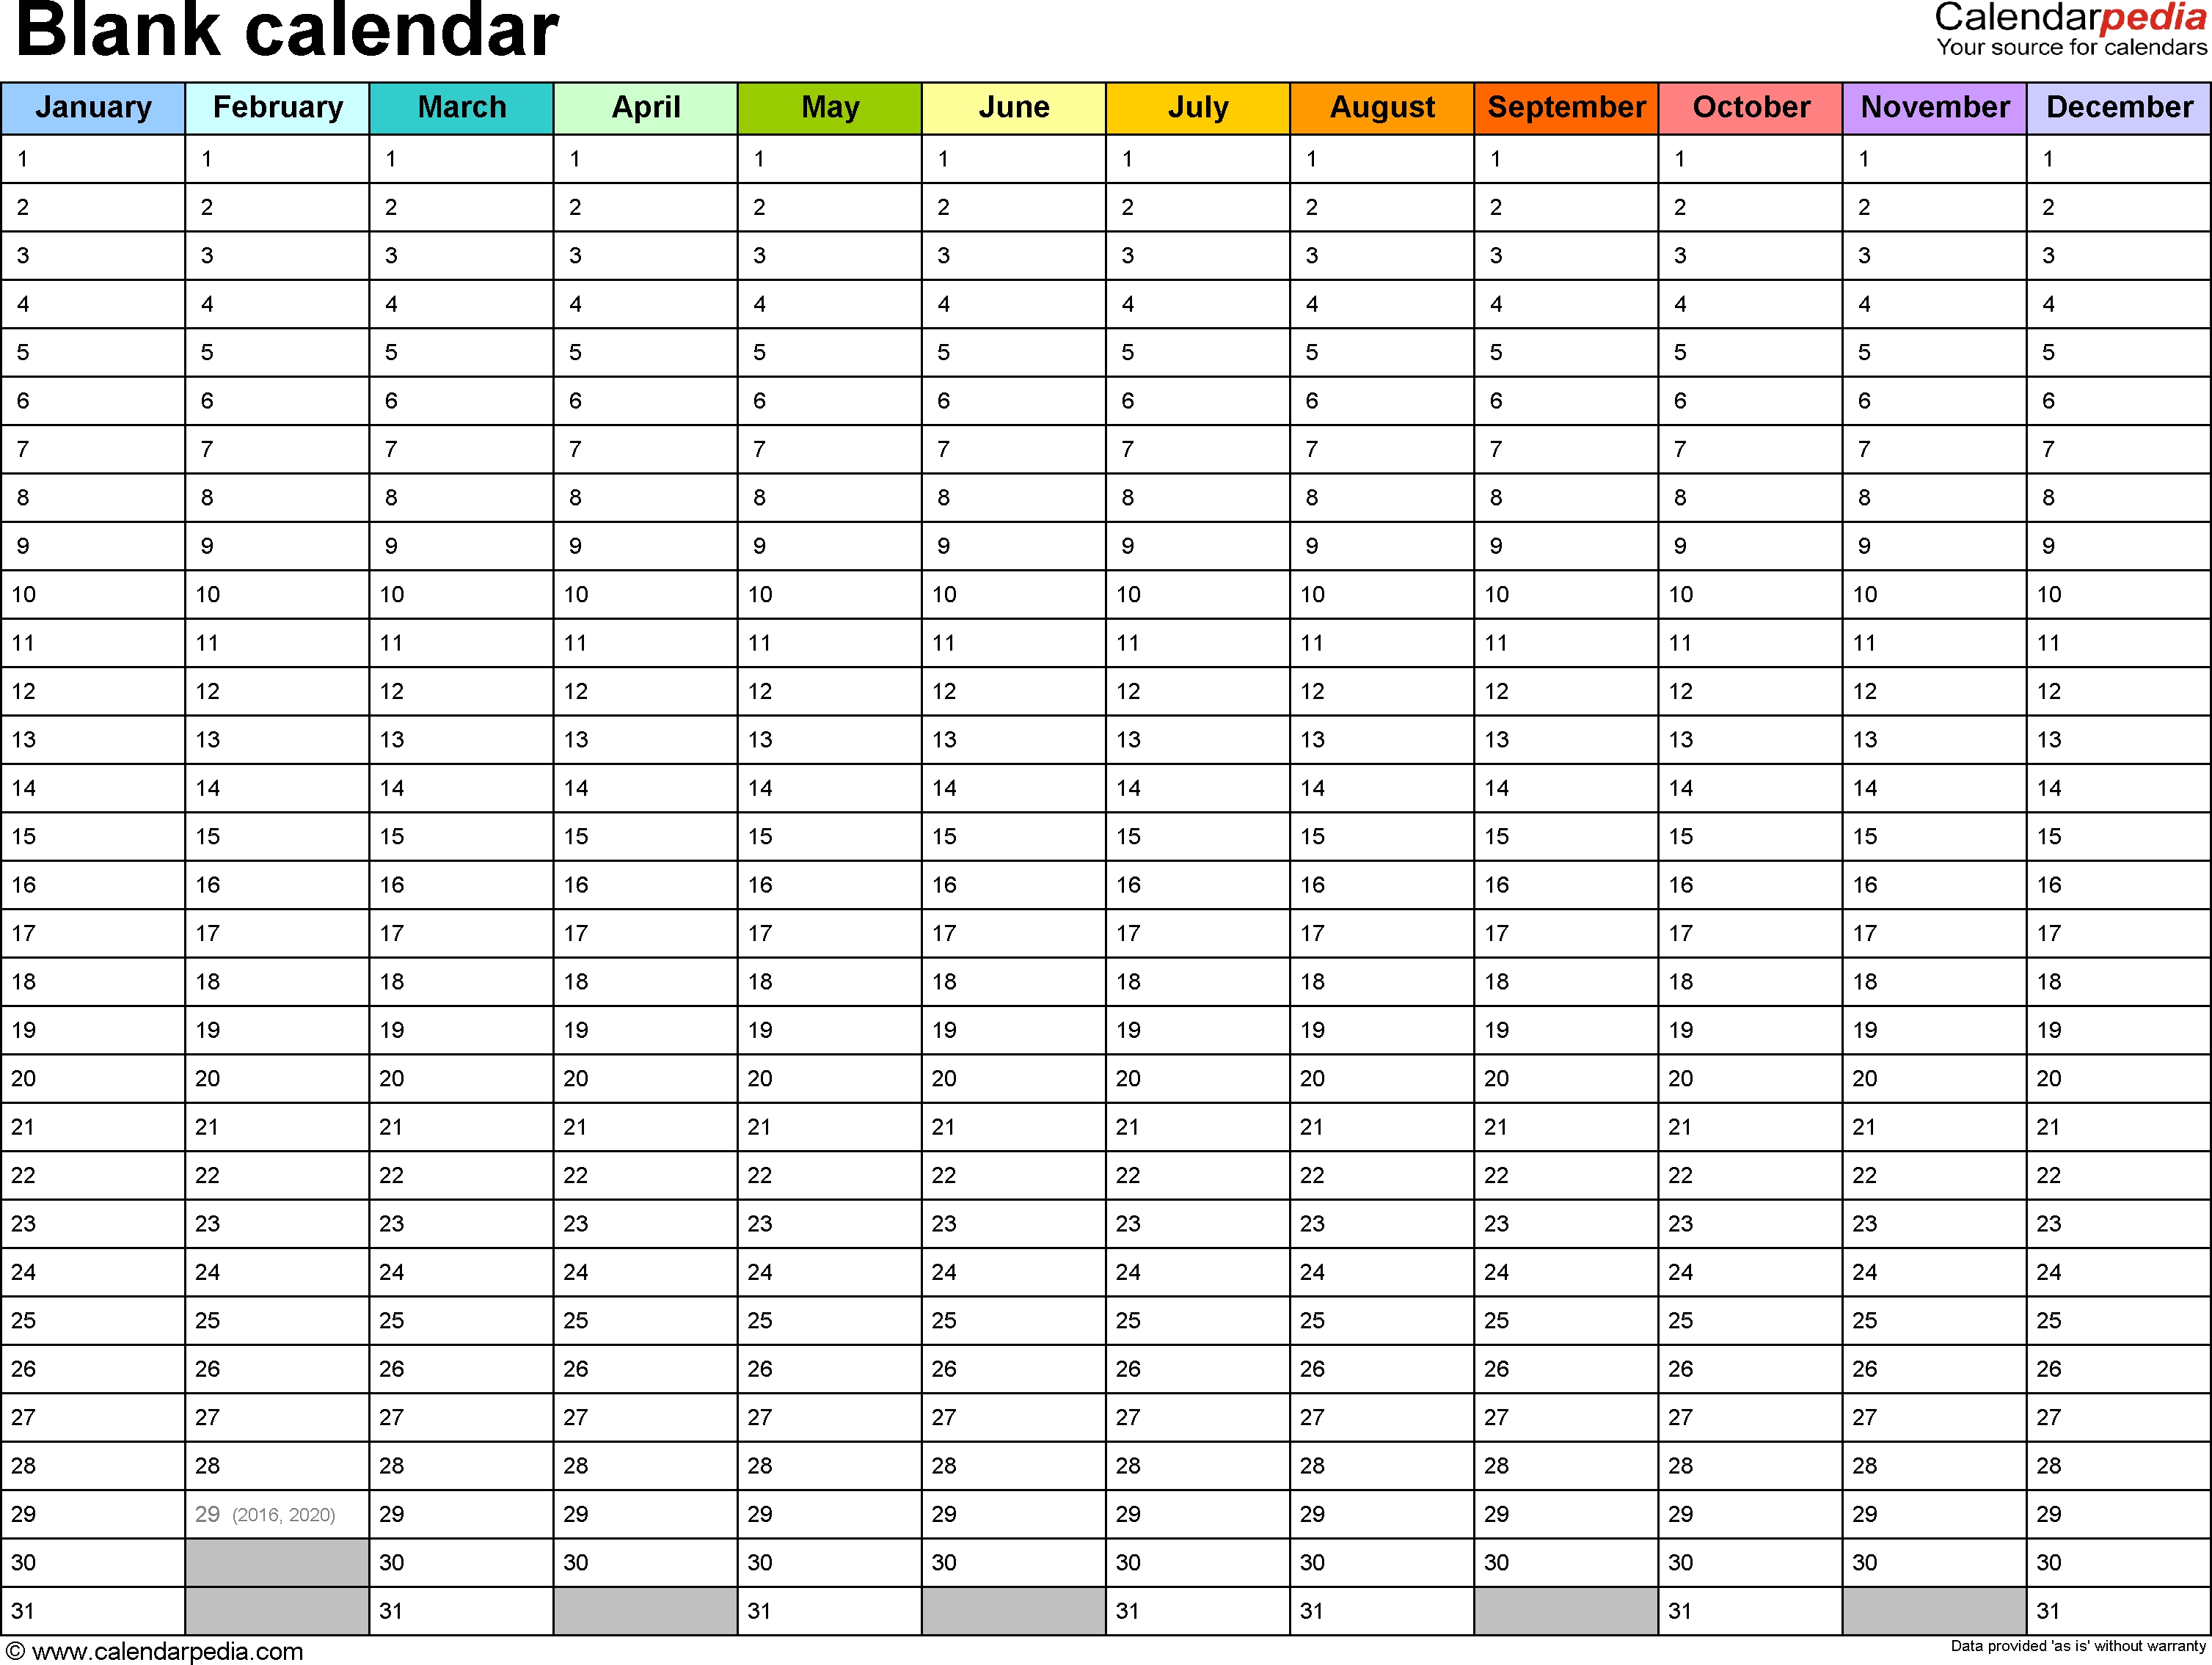 Blank Calendar - 9 Free Printable Microsoft Word Templates within Editable Printable Calendars By Month